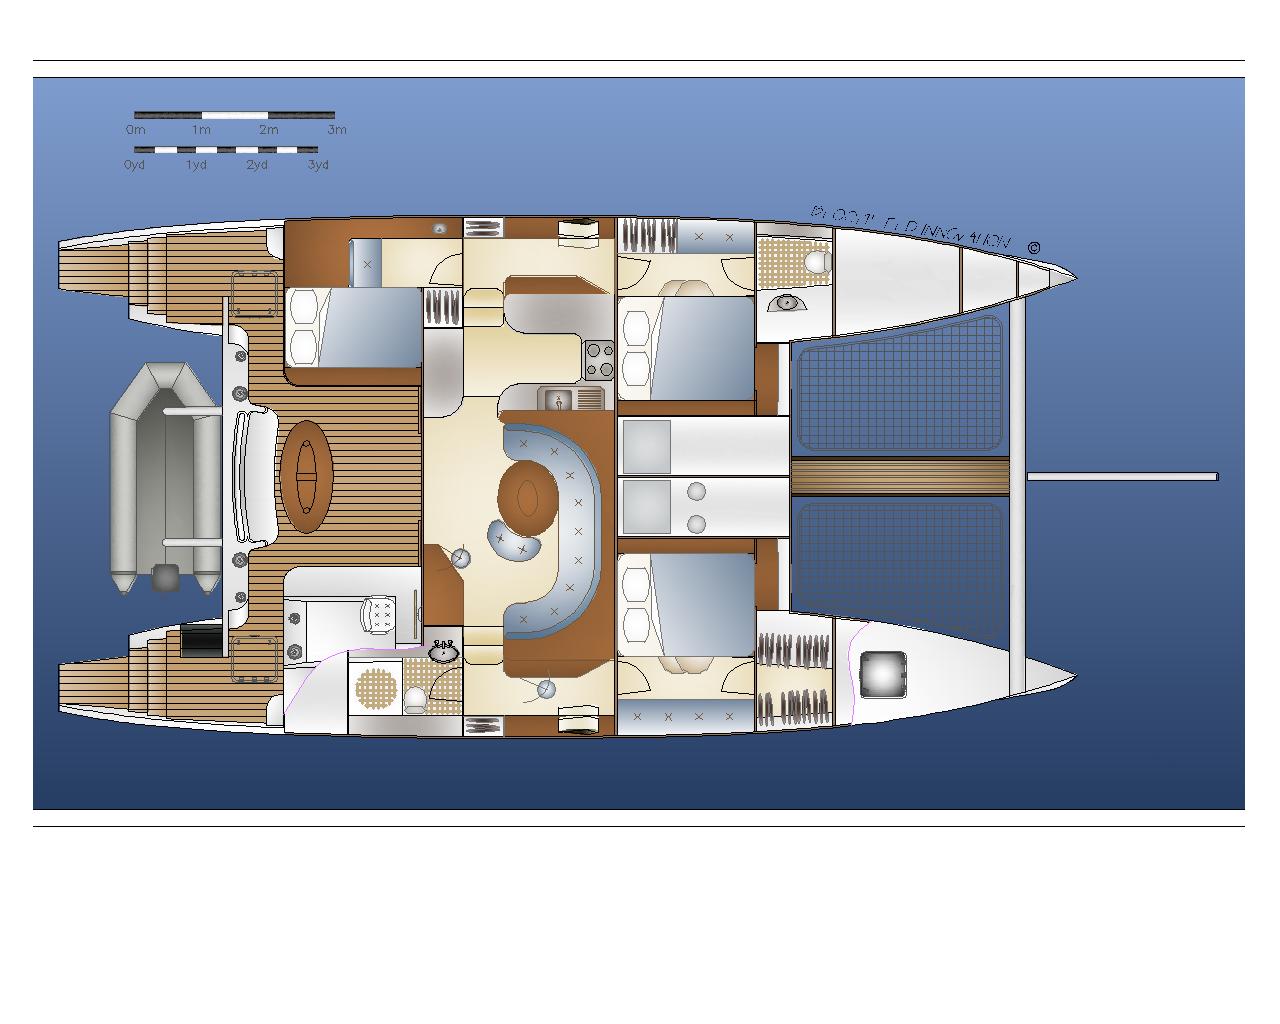 50' Cruising Catamaran (Crowther 591) - Multihull Sailboats - Designs 